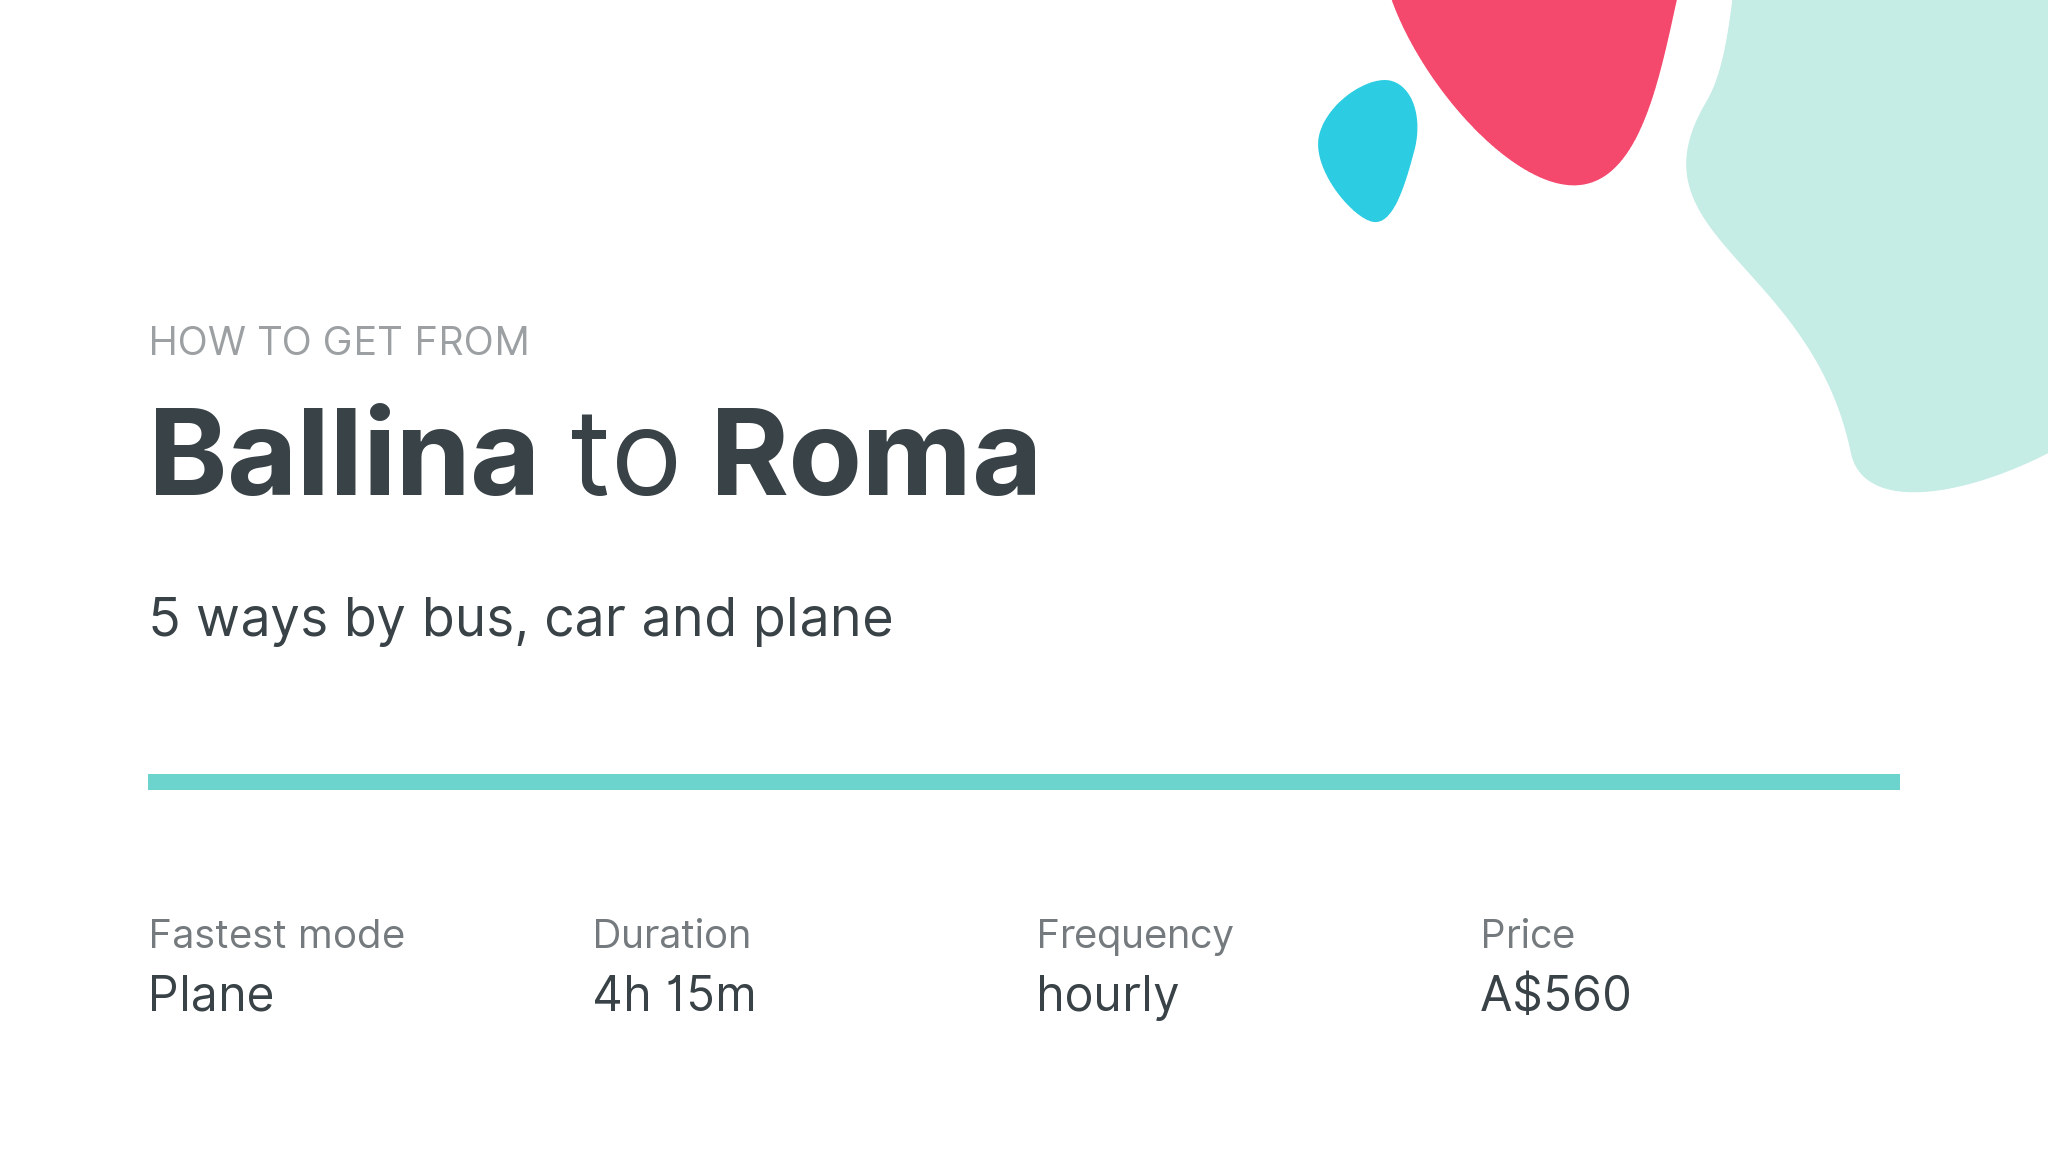 How do I get from Ballina to Roma